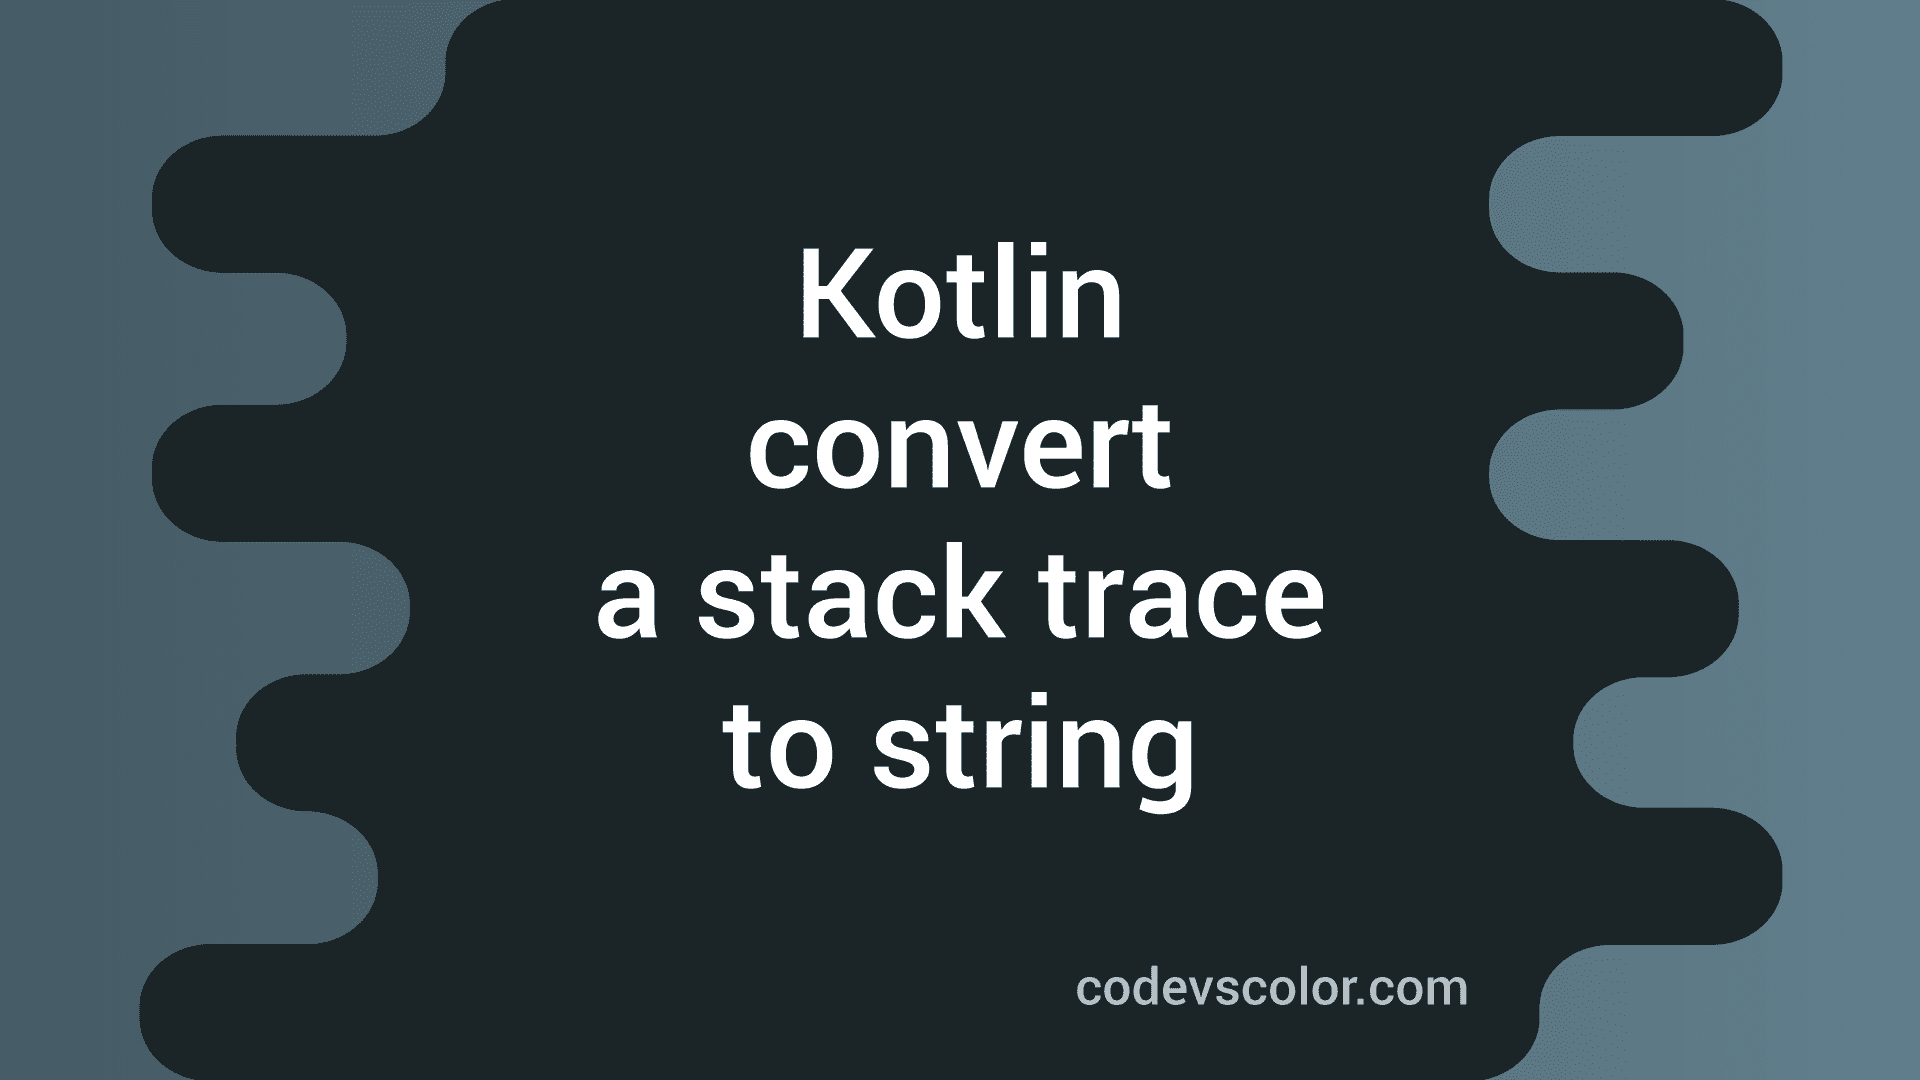 kotlin nullable string